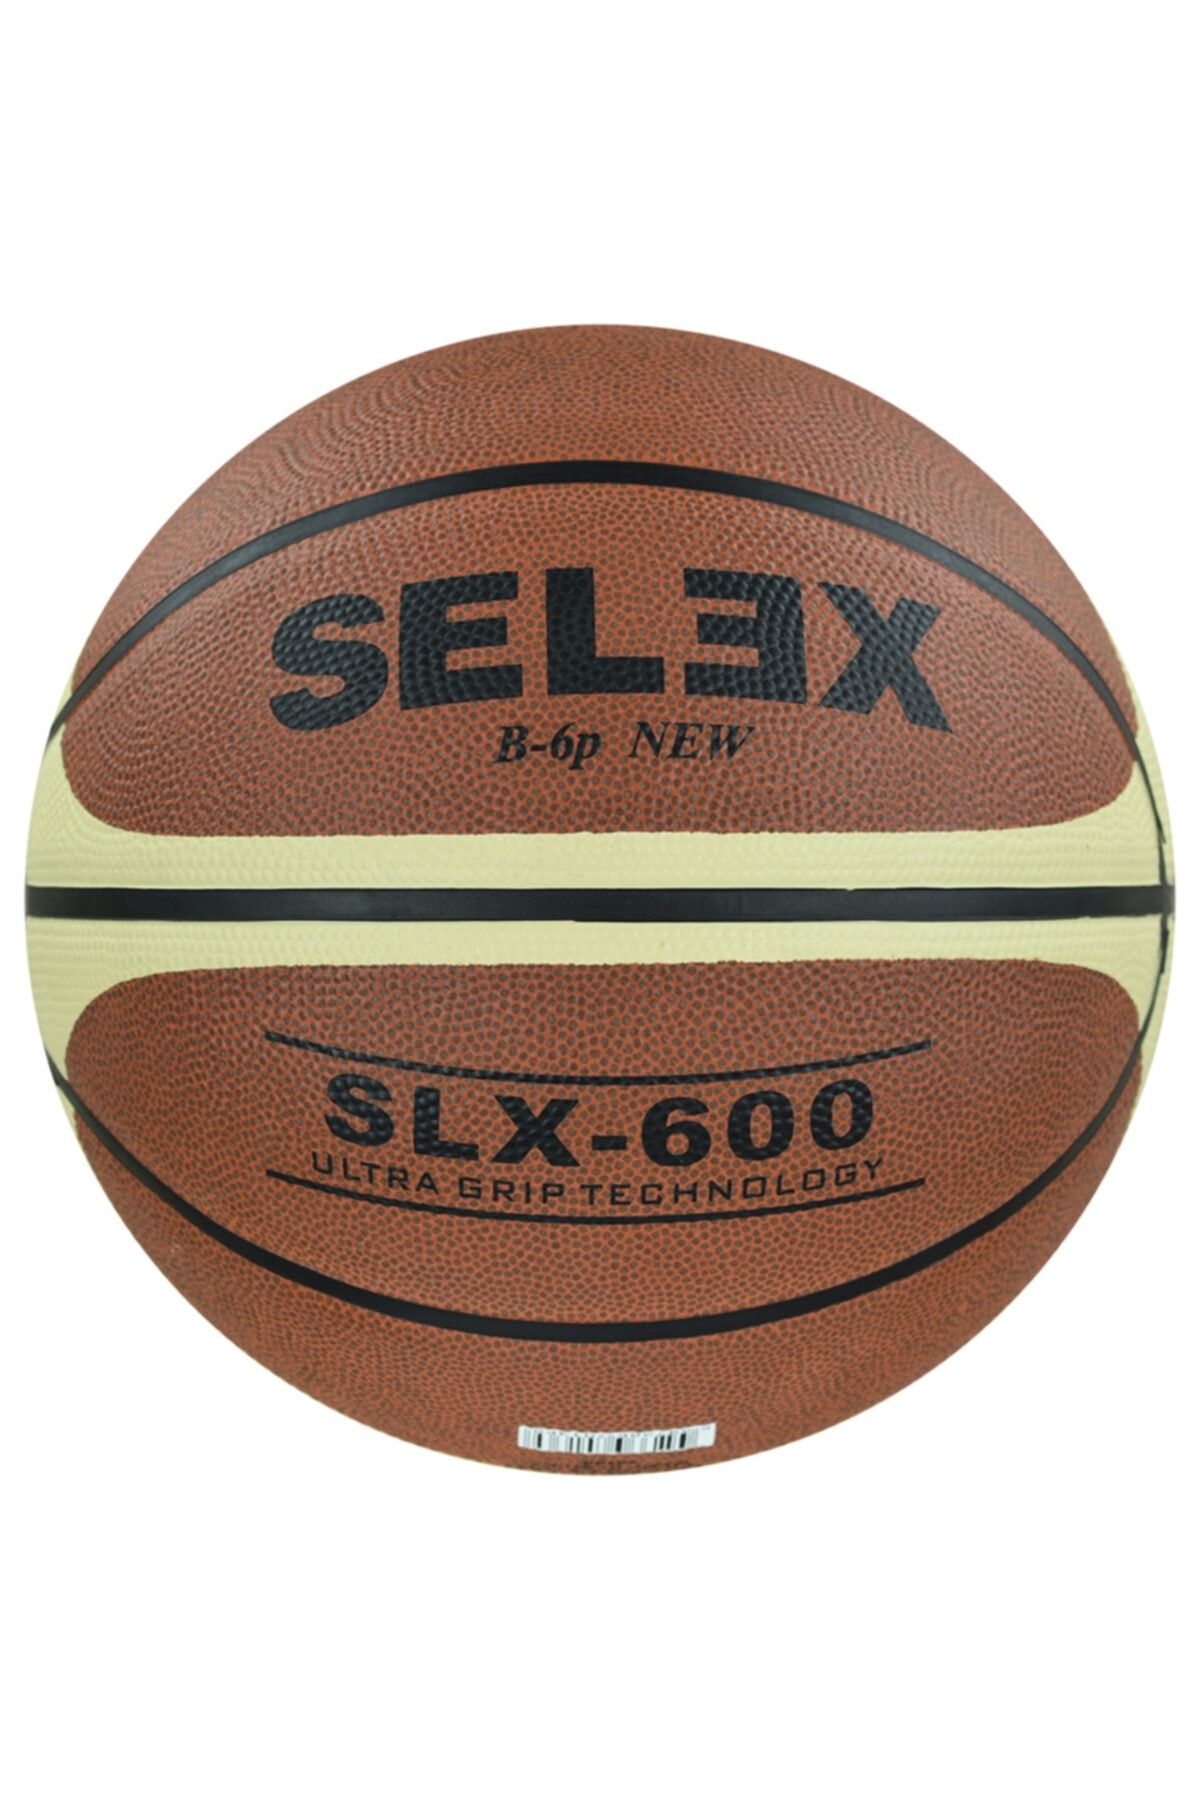 SELEX Basketbol Topu - SLX600